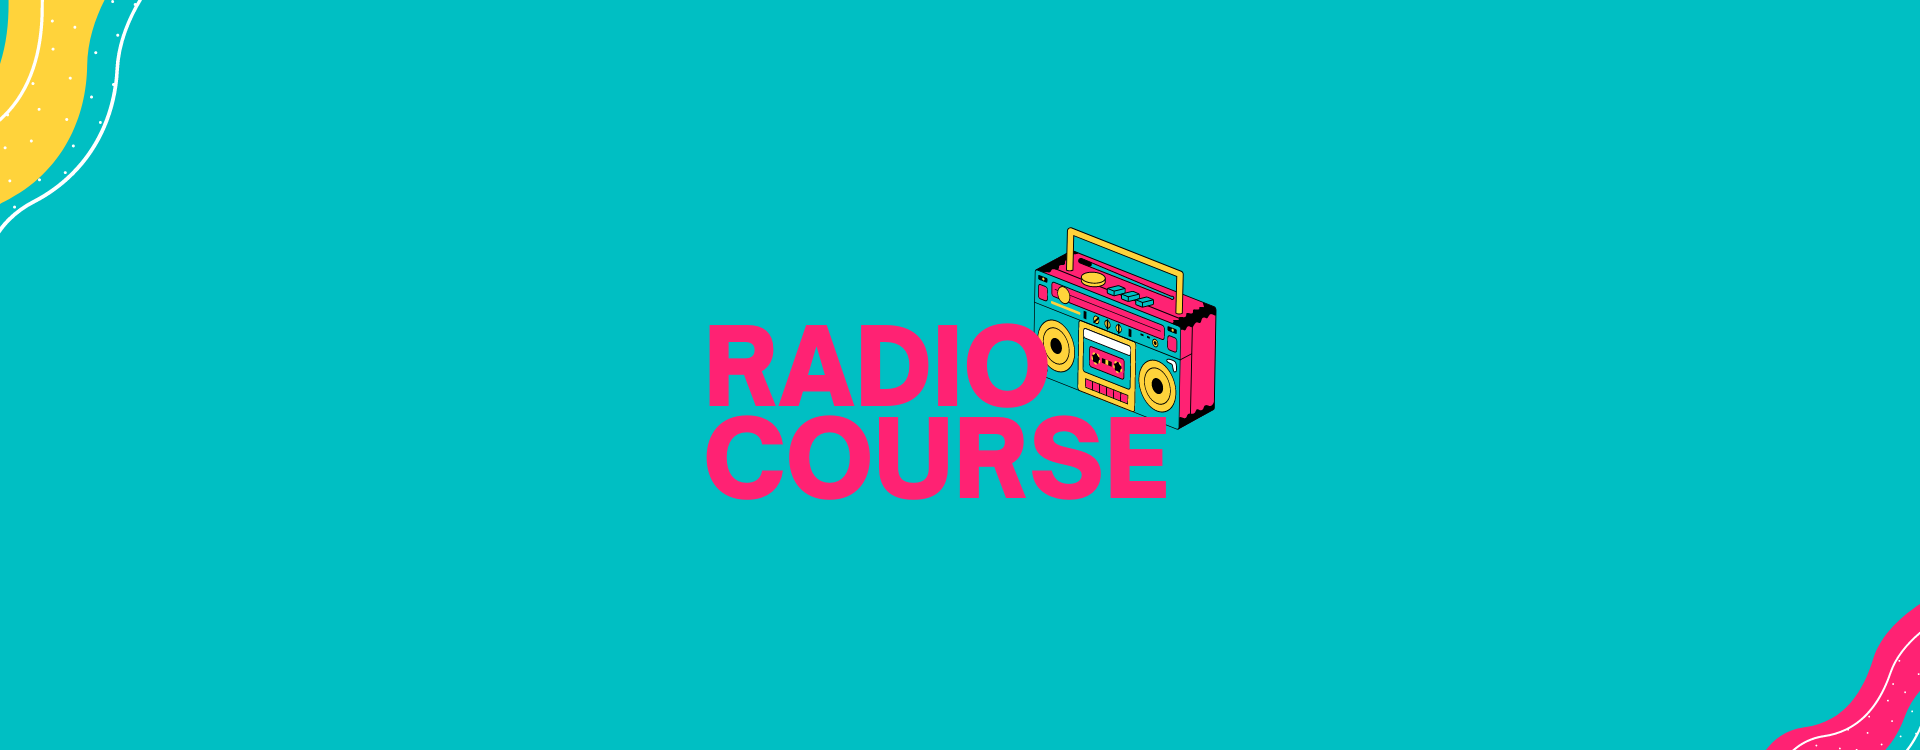 Radio Course Featured Image